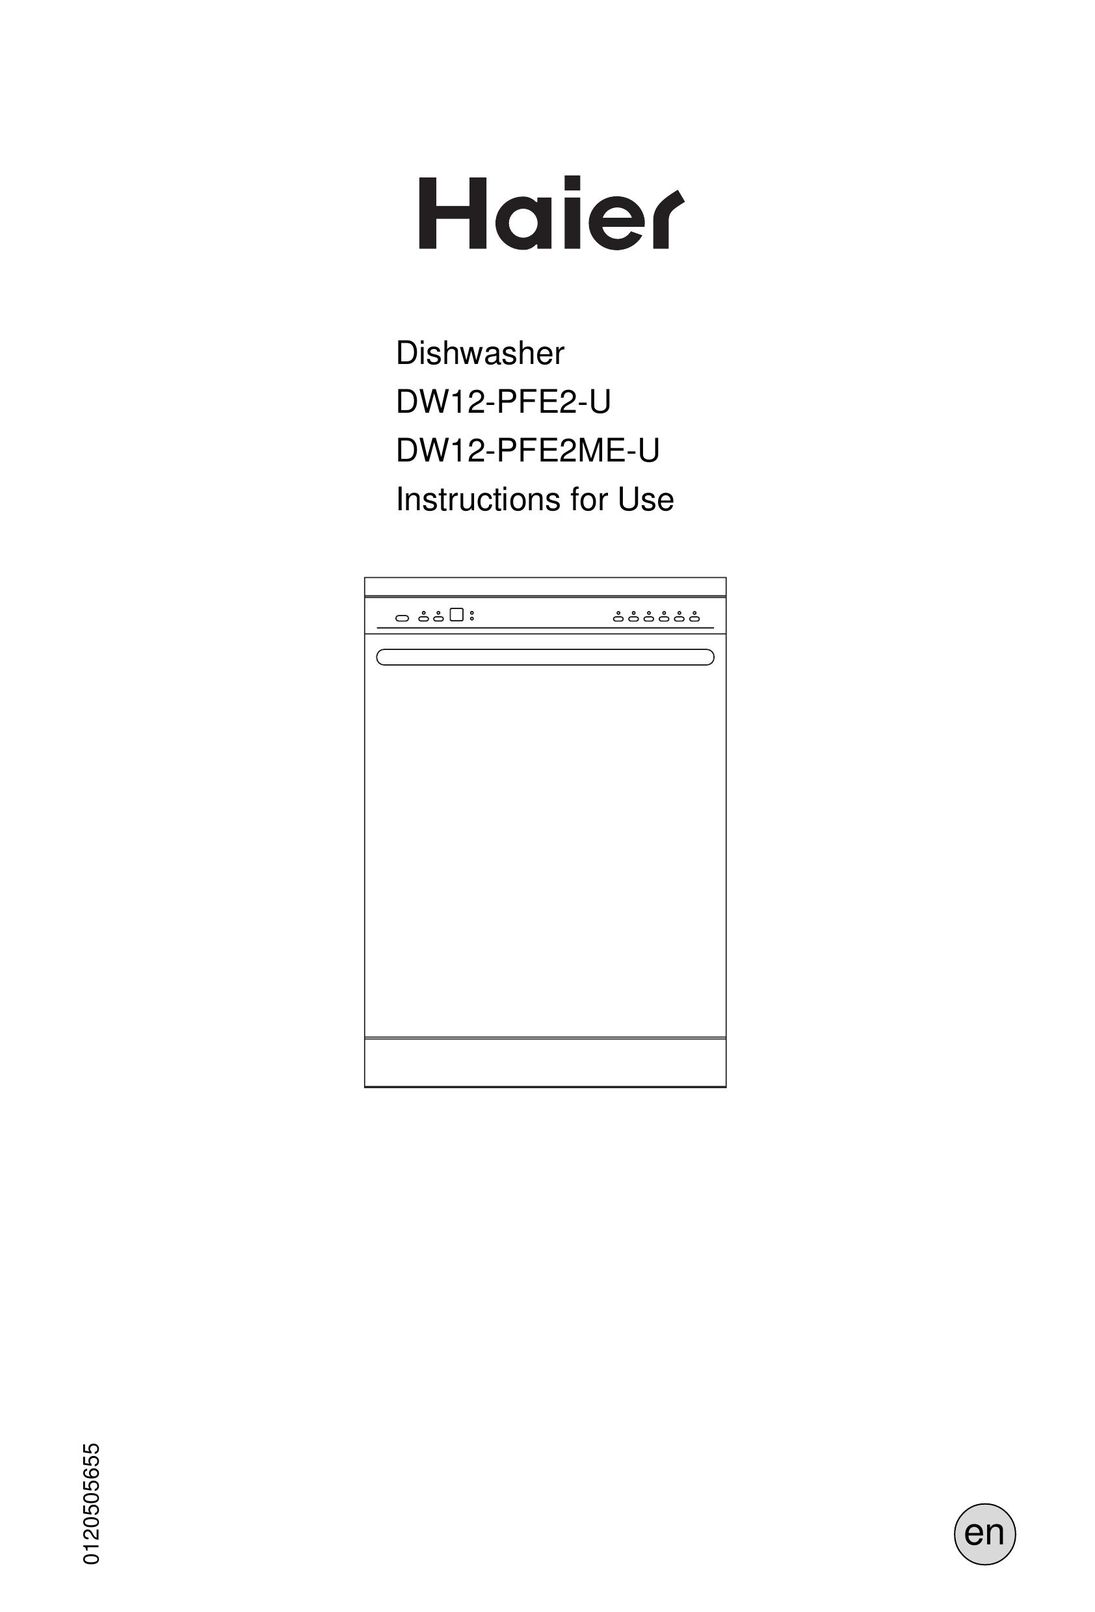 Haier DW12-PFE2-U Dishwasher User Manual